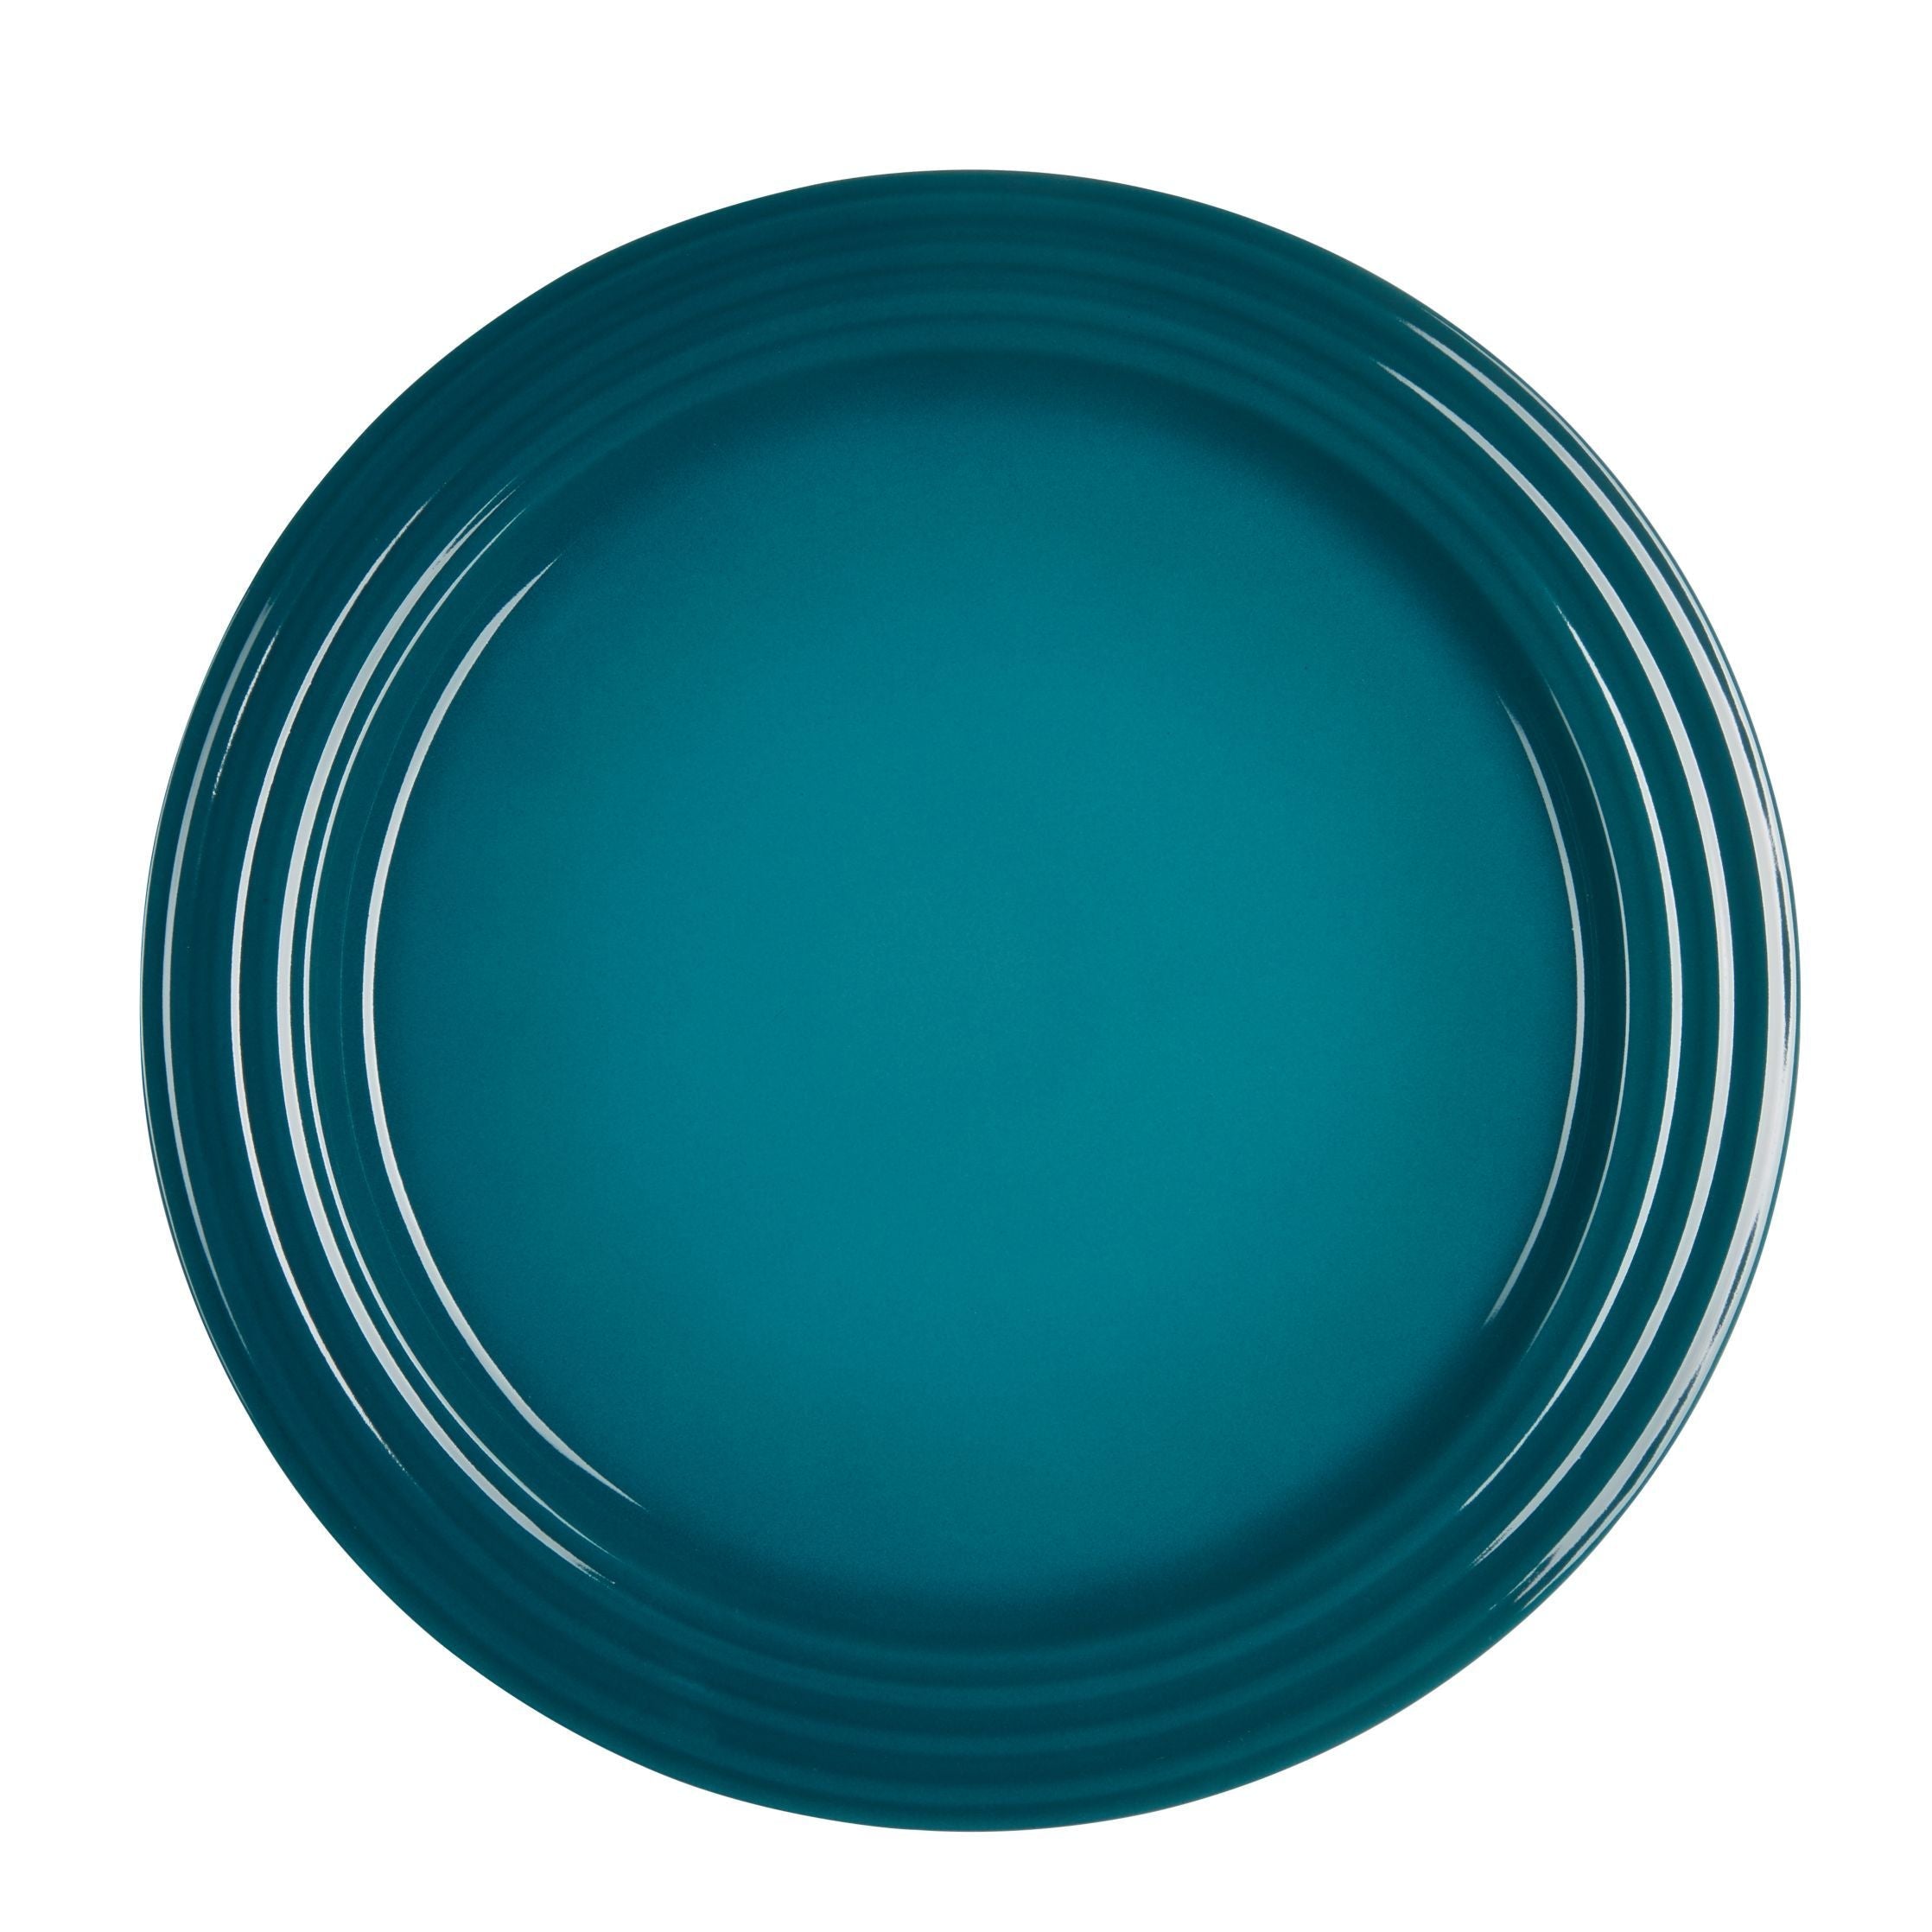 Le Creuset Signature Dinner plato 27 cm, verde azulado profundo